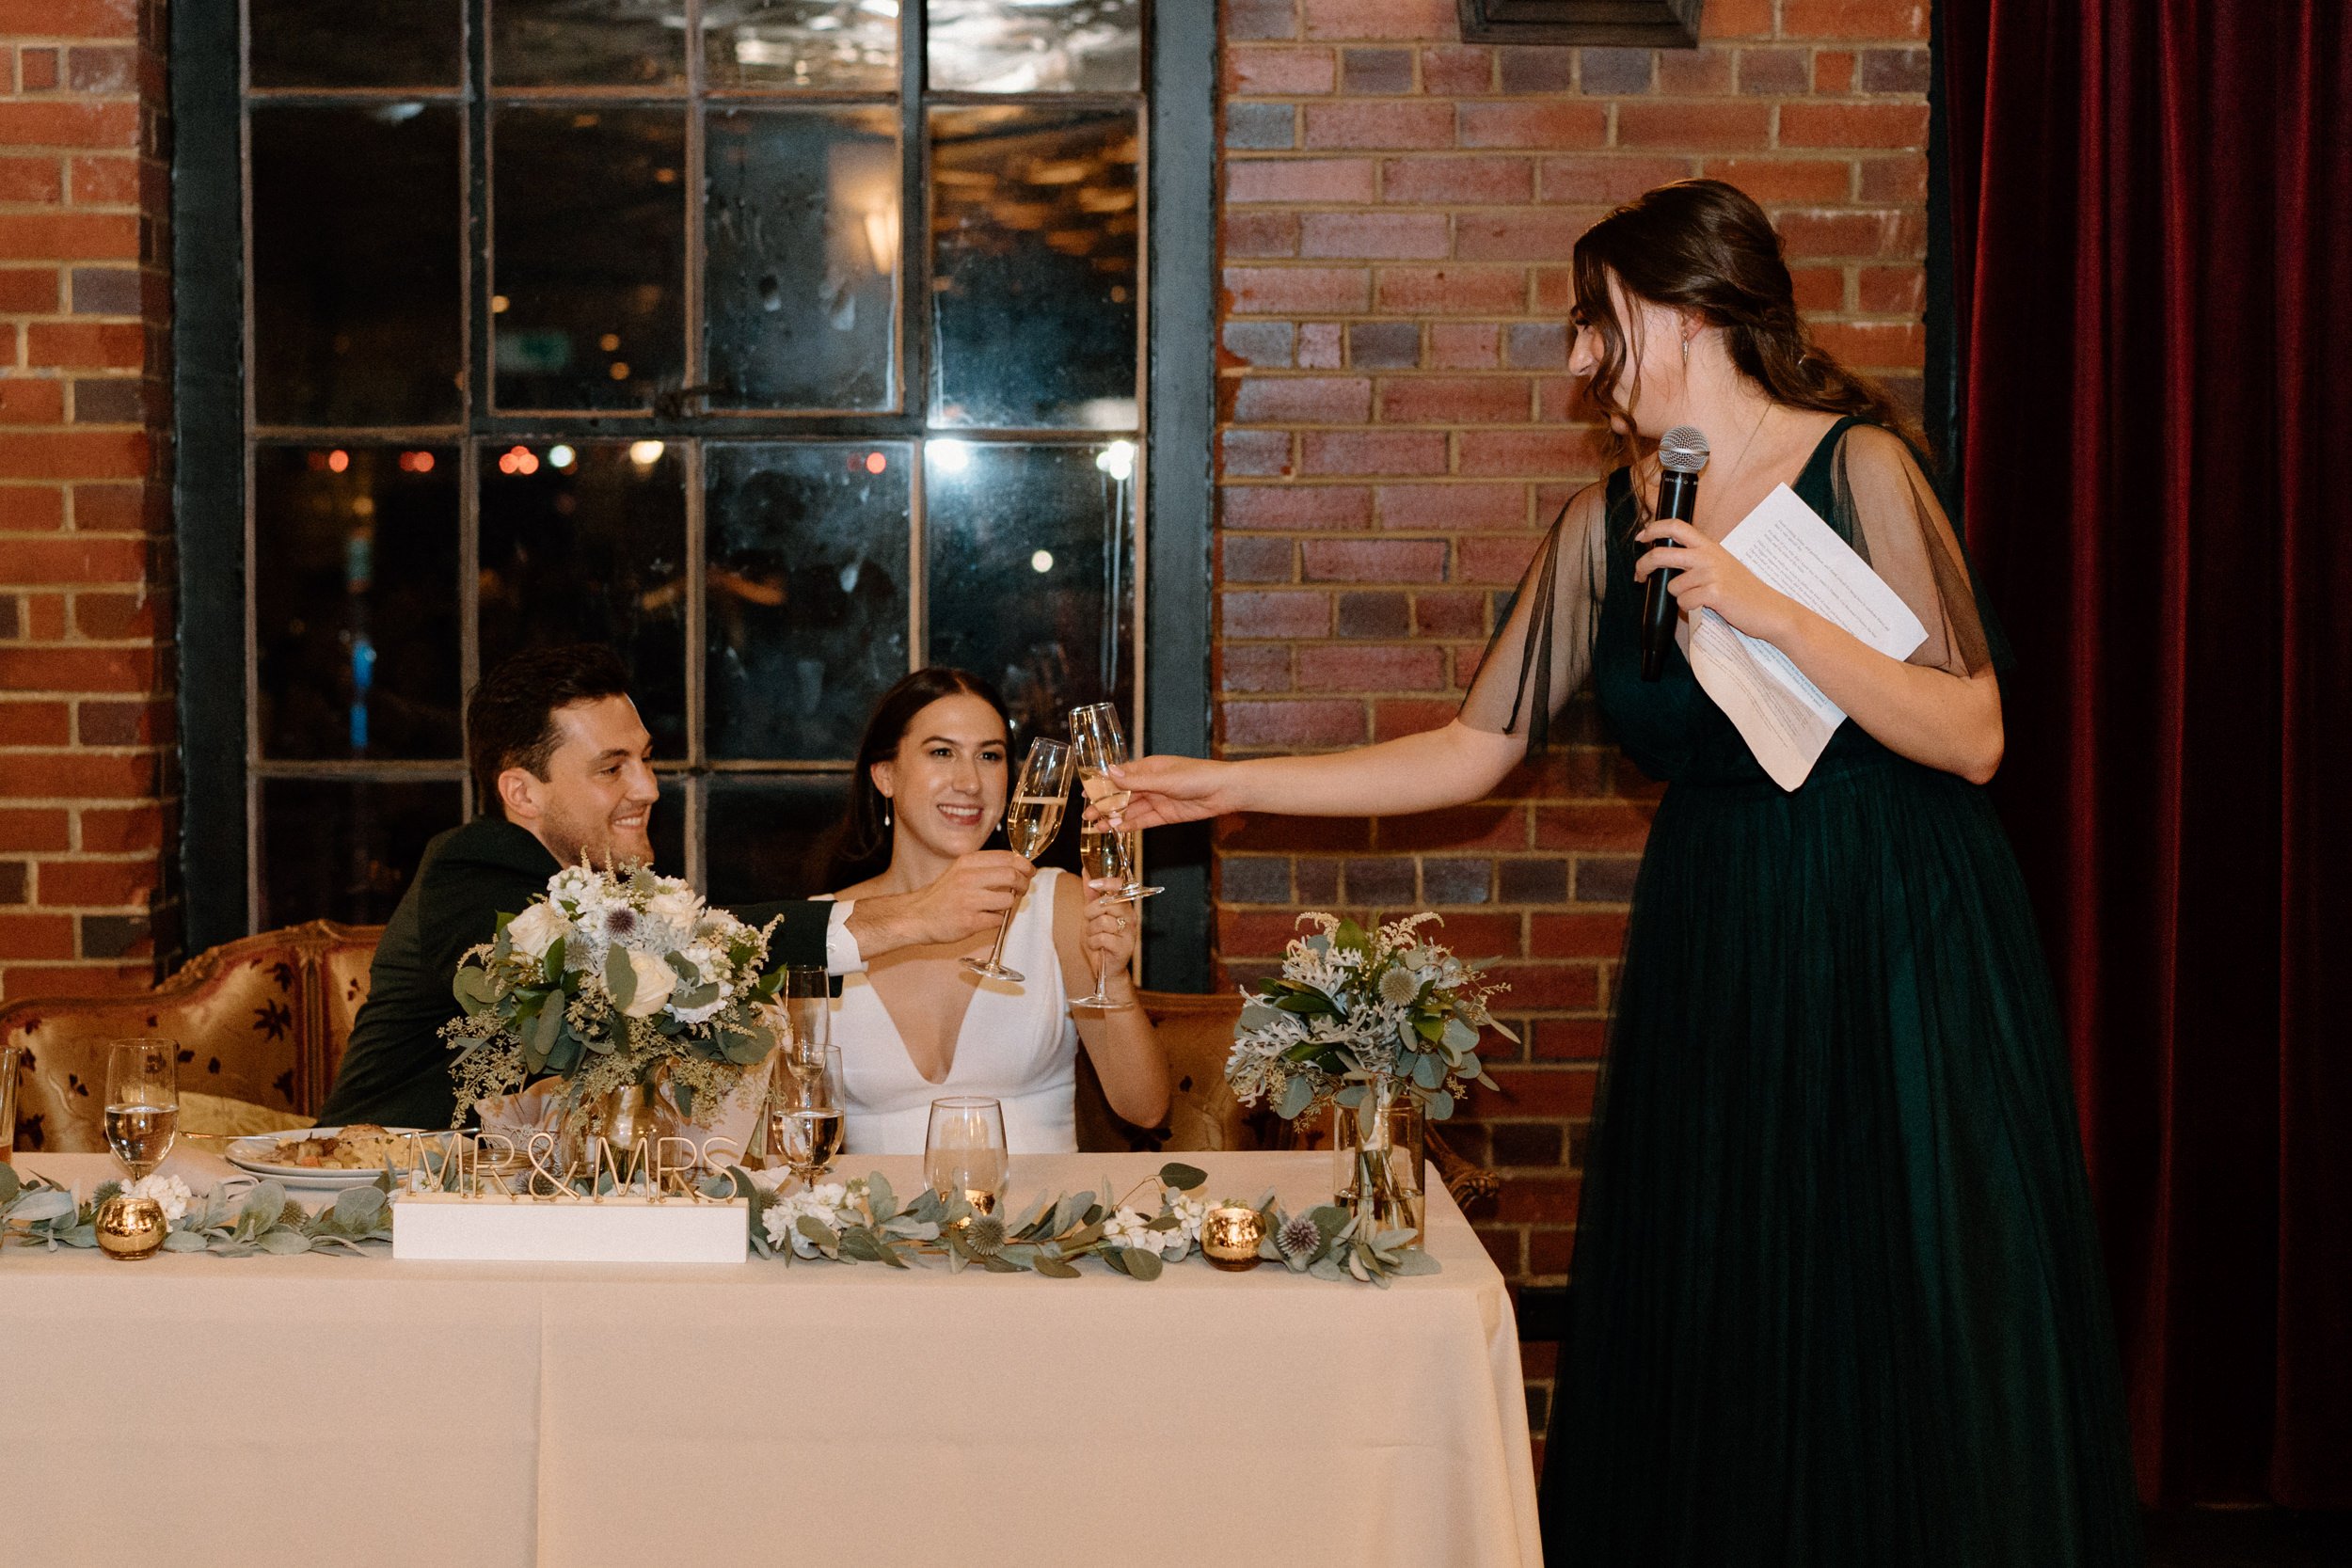 A bridesmaid makes a toast